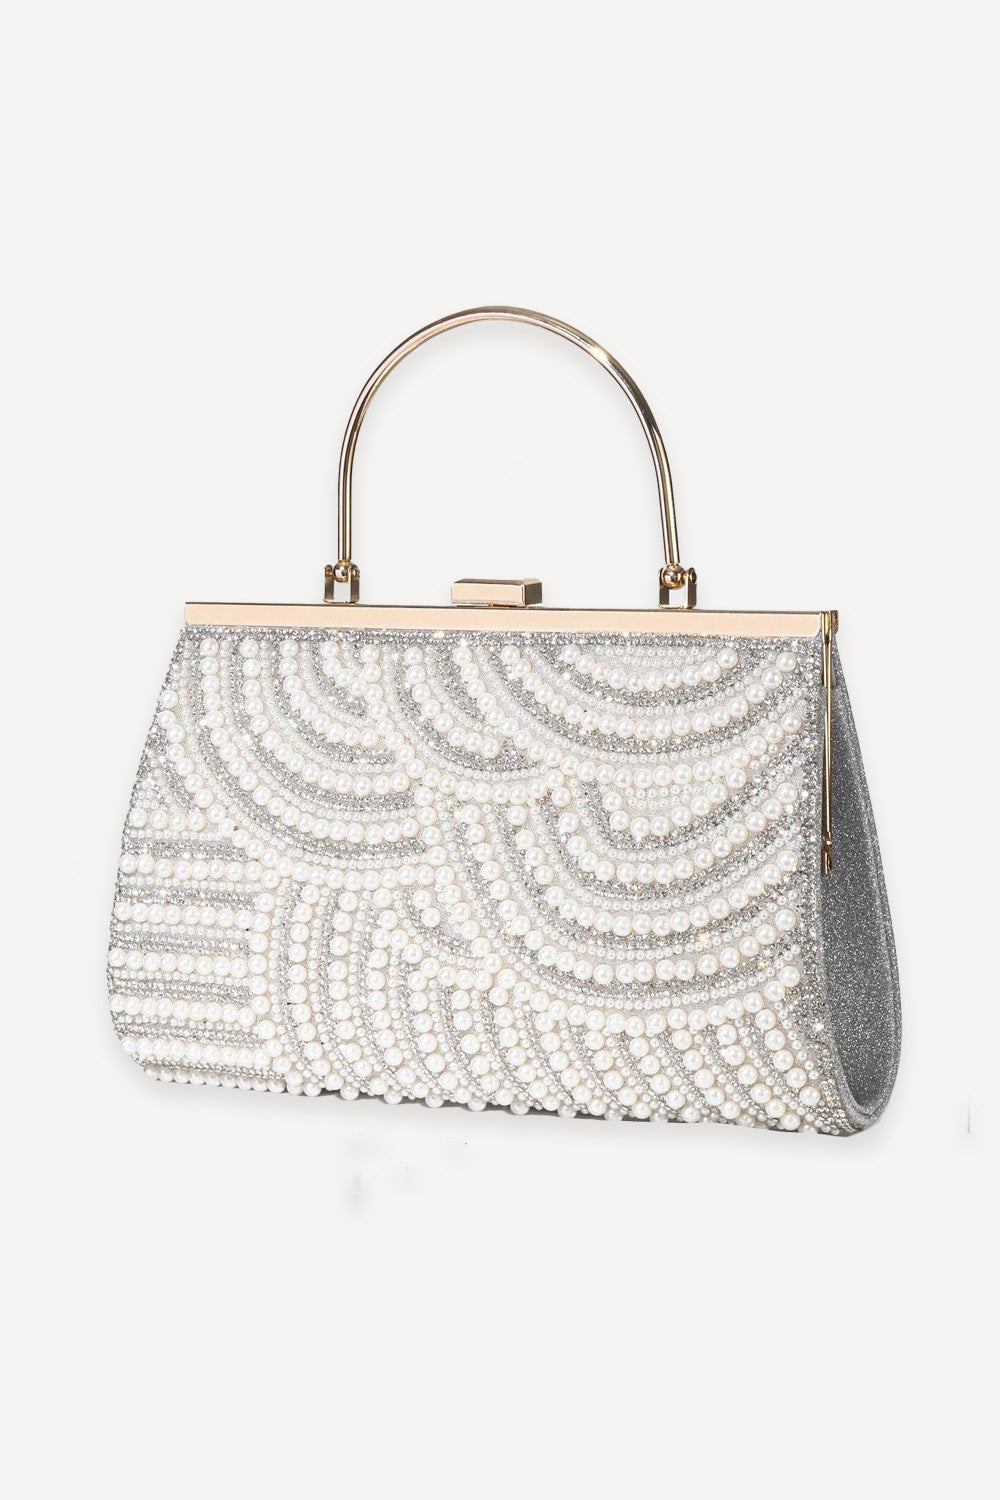 Pearl and crustal encrusted handbag